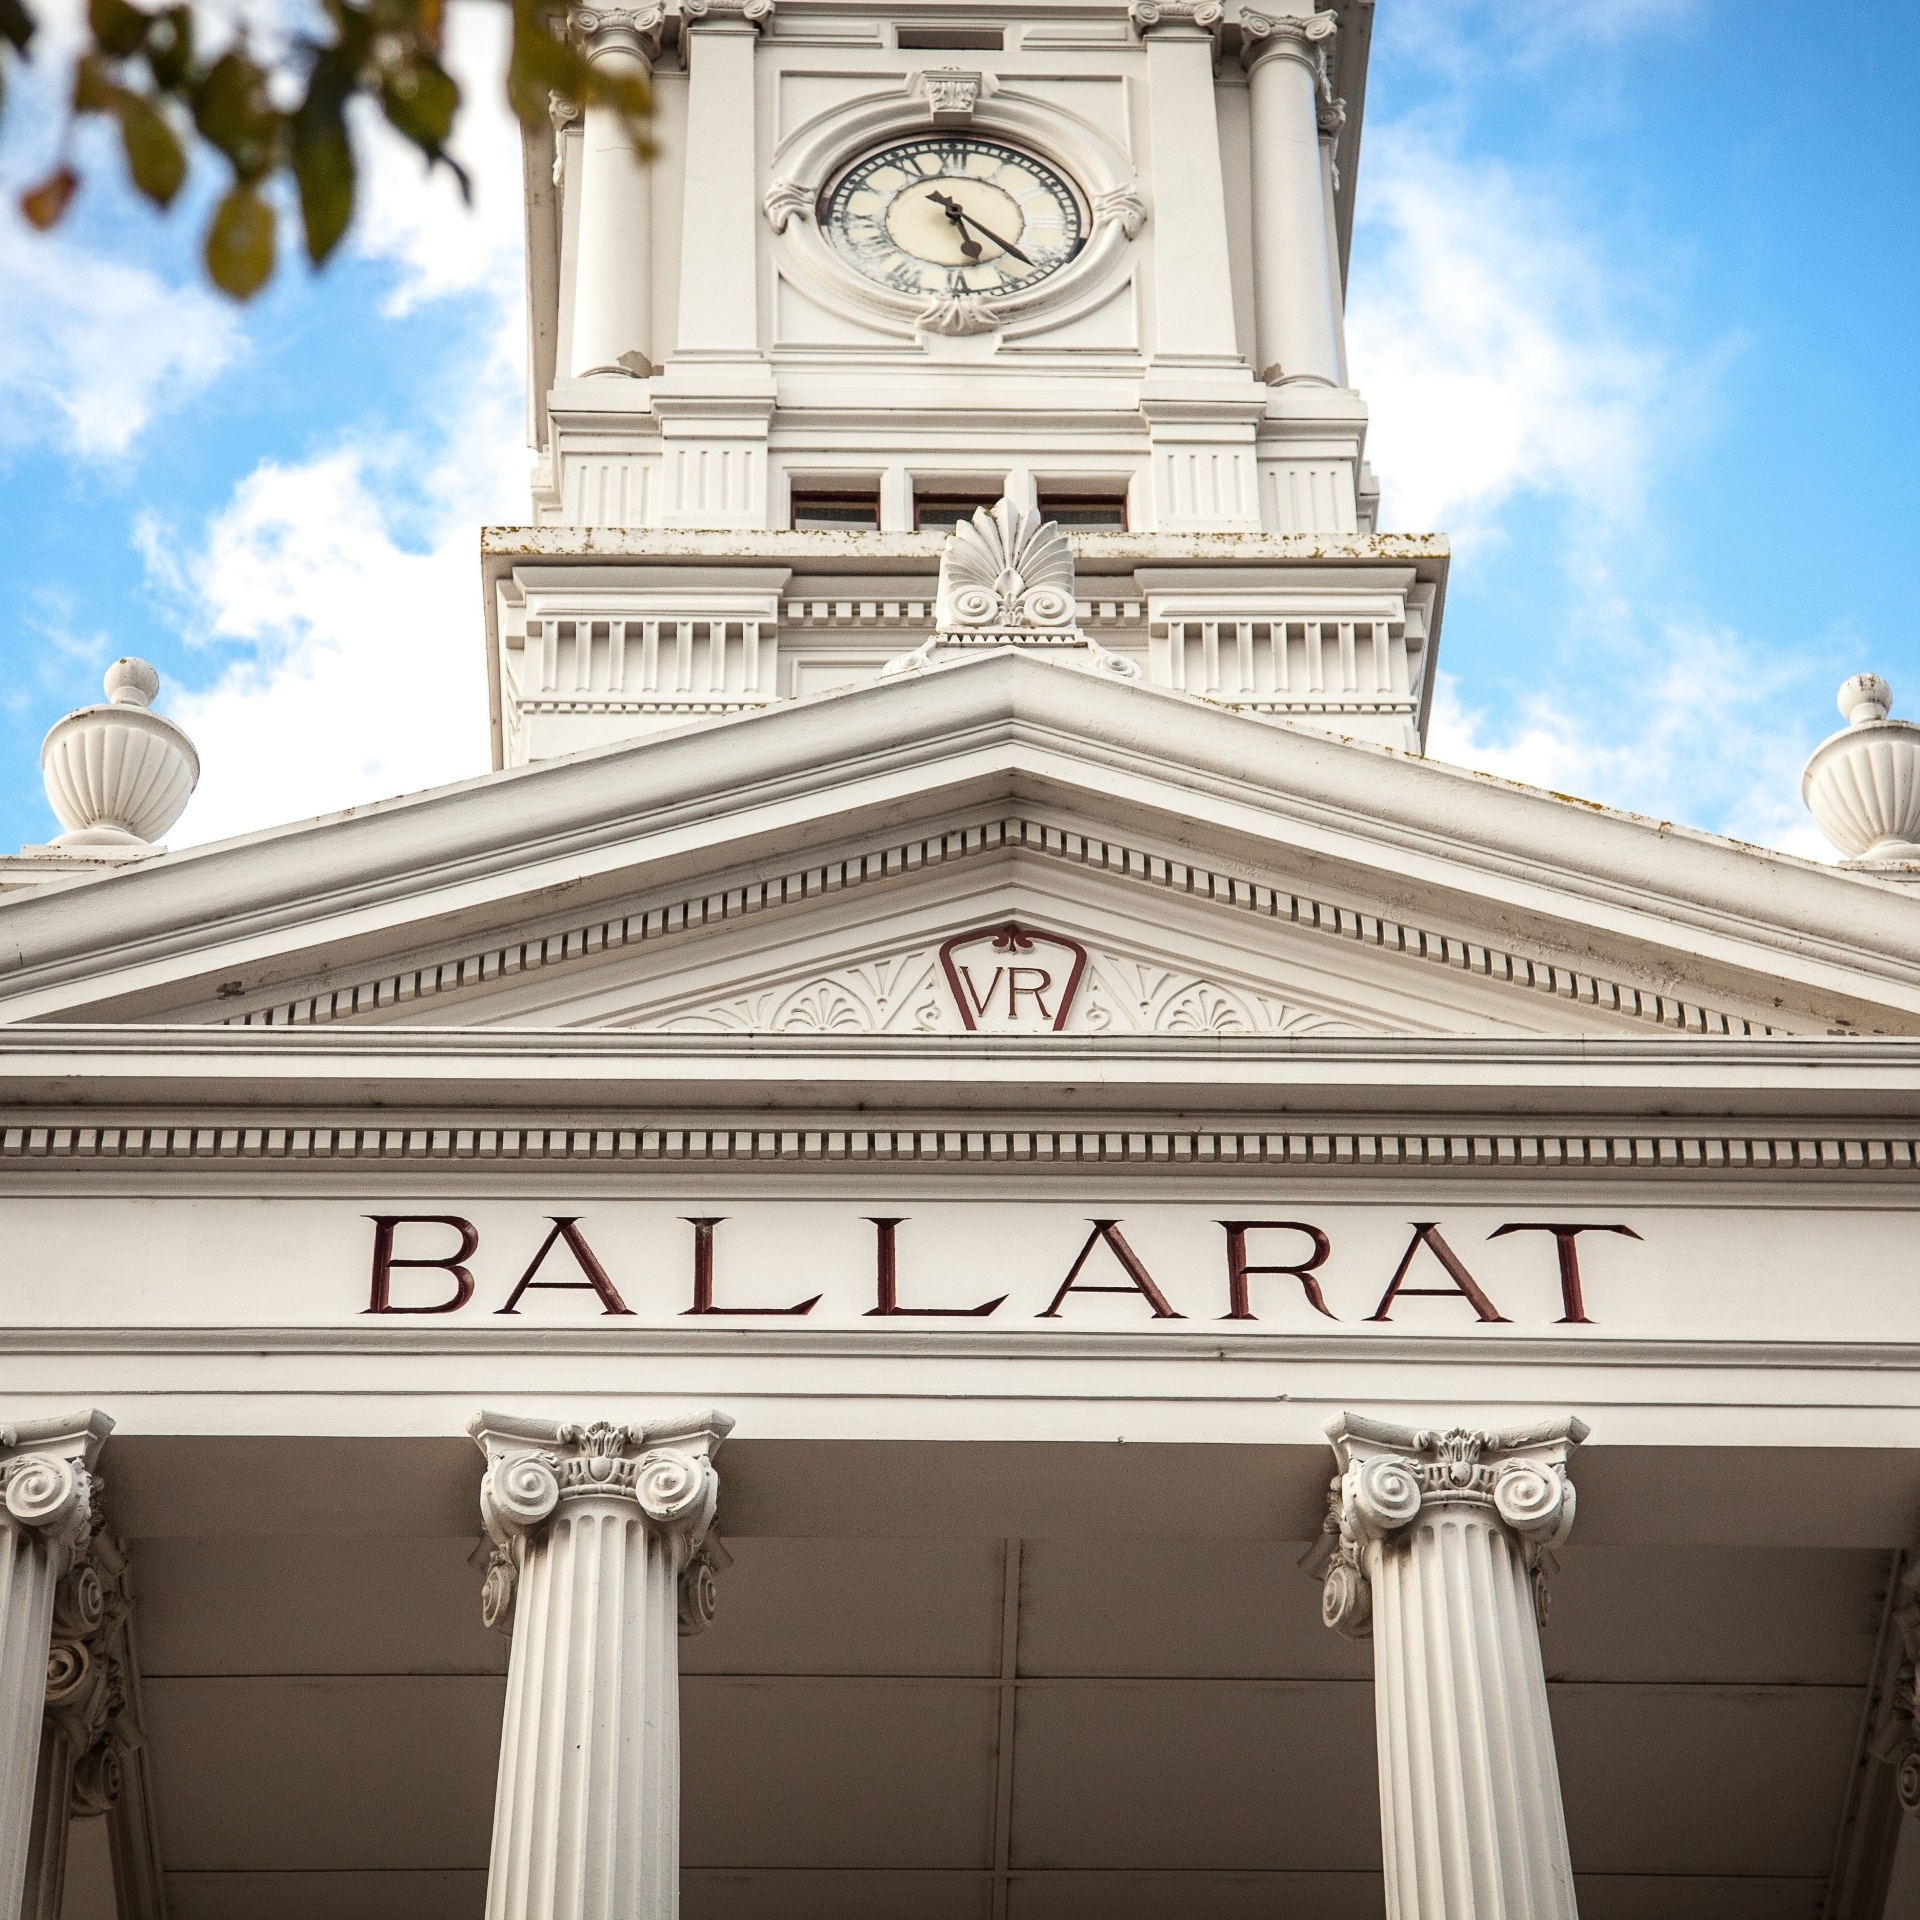 Ballarat Railway Station, Ballarat, Victoria © Visit Victoria